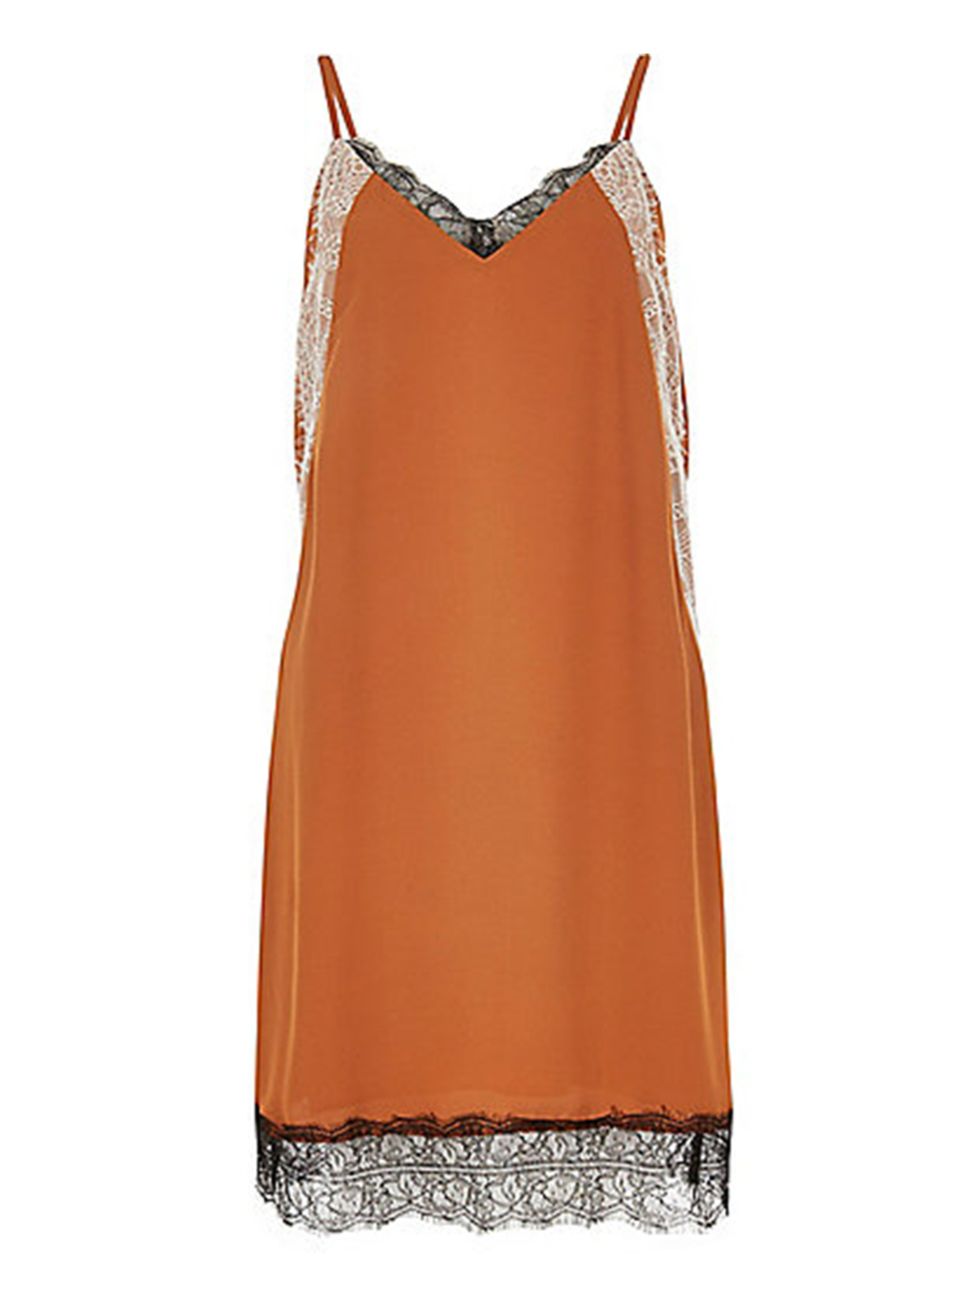 <p>Slip dress, £38, <a href="http://www.riverisland.com/women/dresses/day--t-shirt-dresses/rust-brown-lace-slip-dress-681293" target="_blank">River Island </a></p>